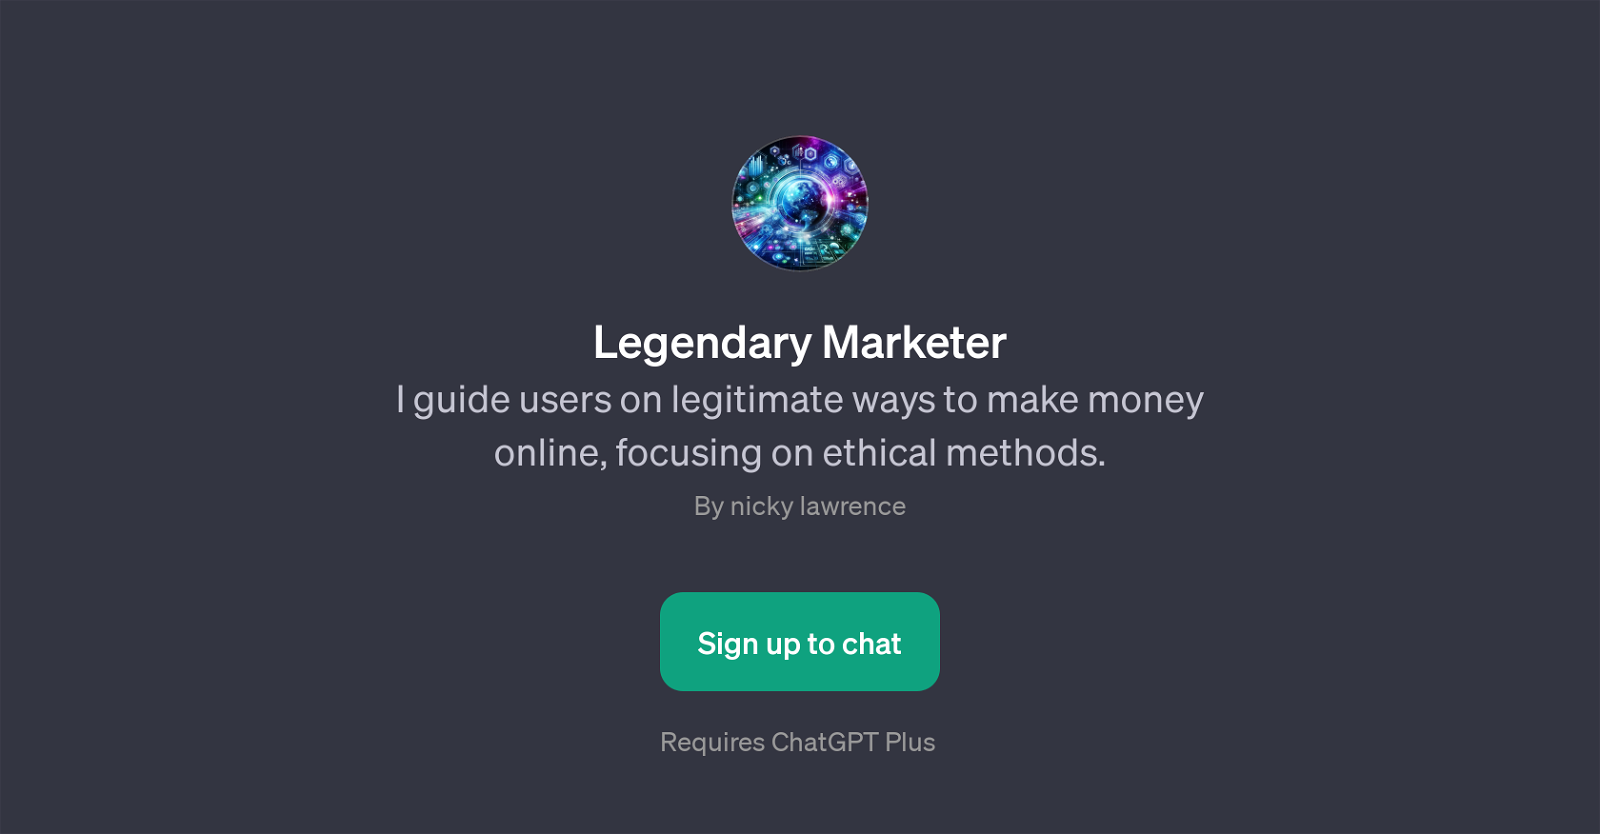 Legendary Marketer website